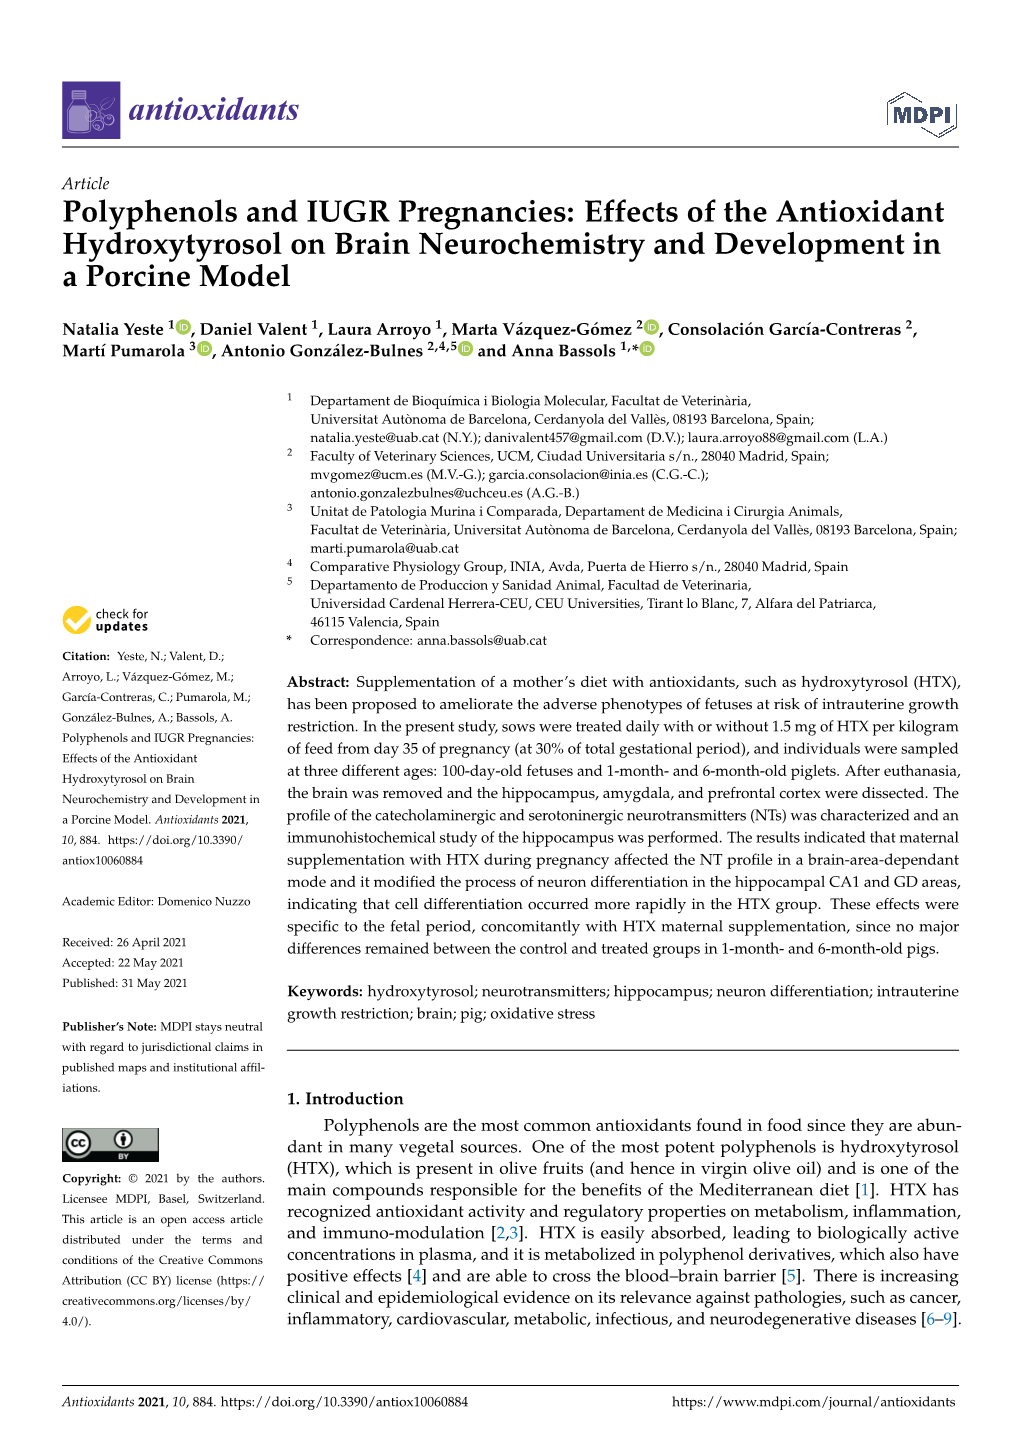 Polyphenols and IUGR Pregnancies: Effects of the Antioxidant Hydroxytyrosol on Brain Neurochemistry and Development in a Porcine Model